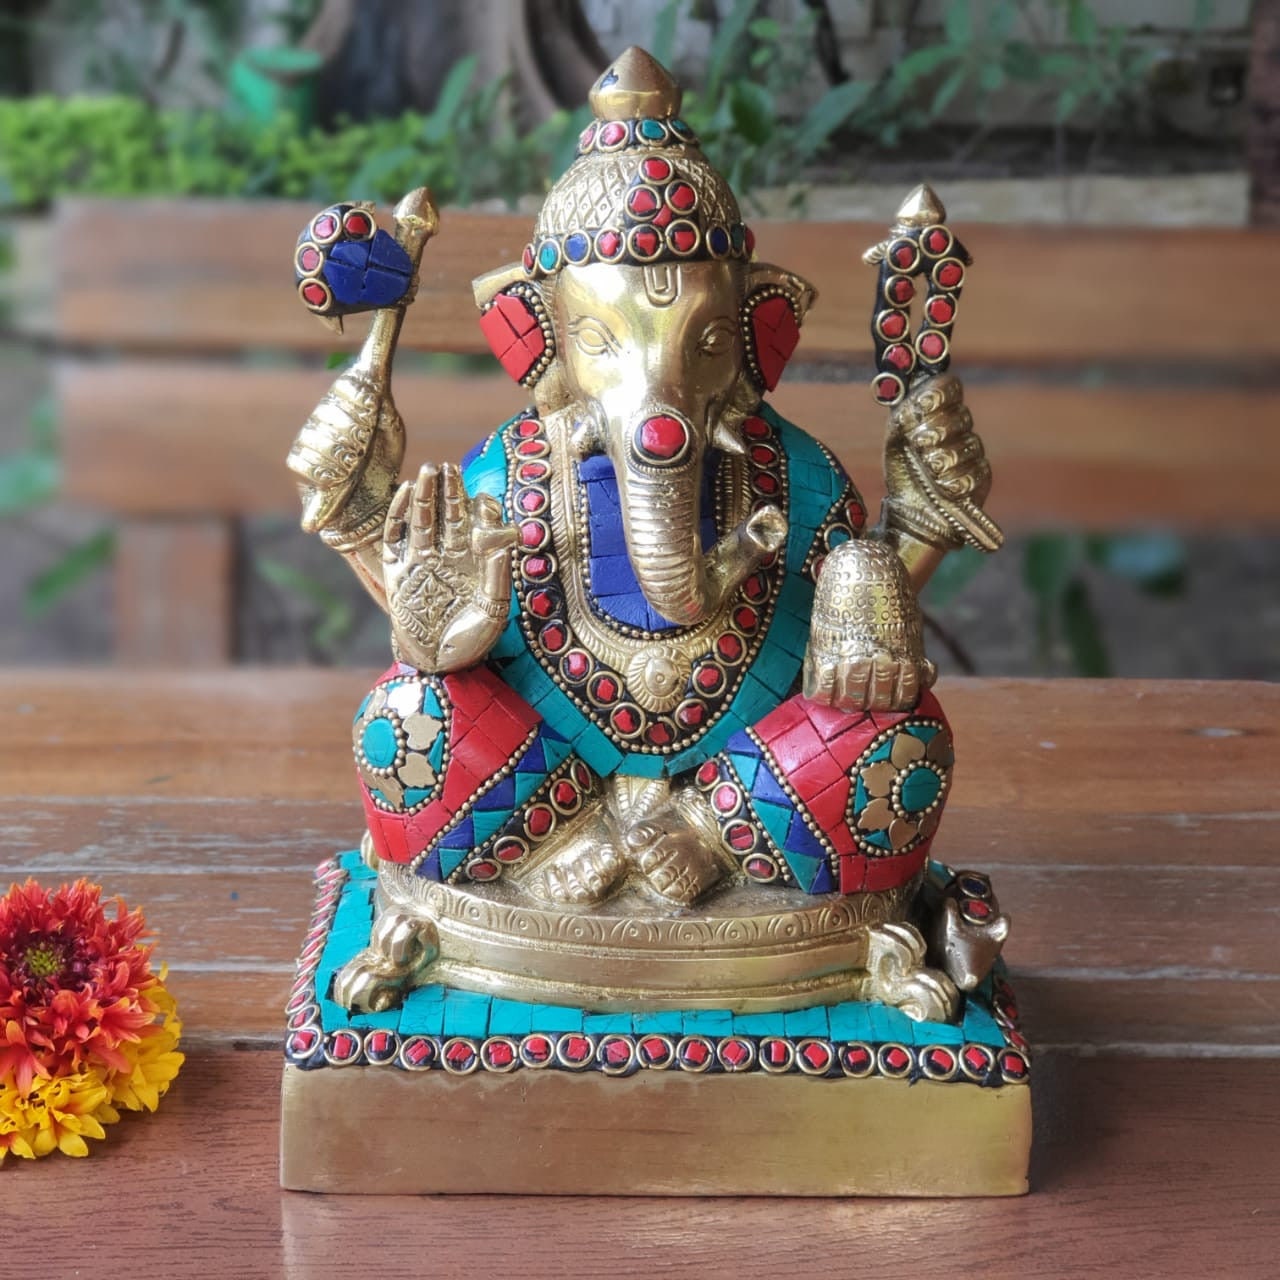 Home Decorative Brass Statue,Birthday Gift.Indian Handicrafted Brass Lord Ganesha Murti Idol For Home Decor And Temple,Brass Ganesha Statue.